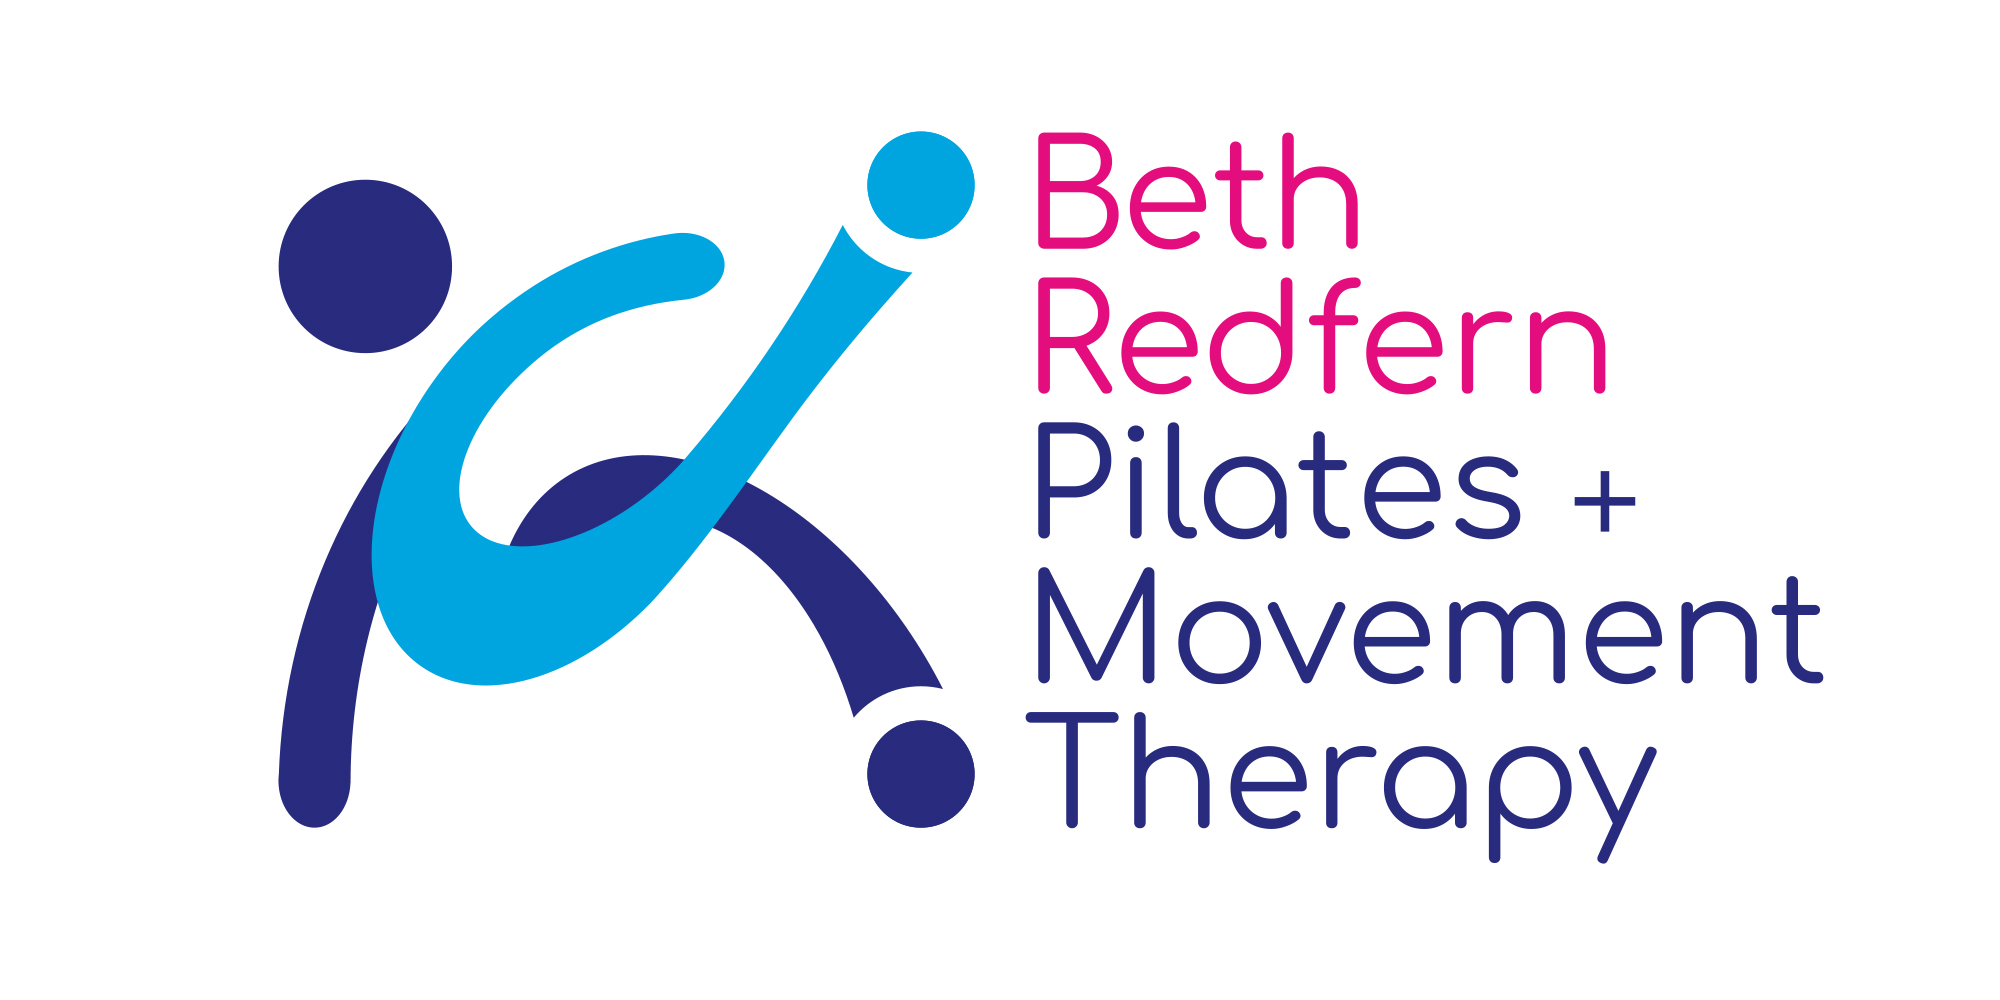 Beth Redfern Pilates